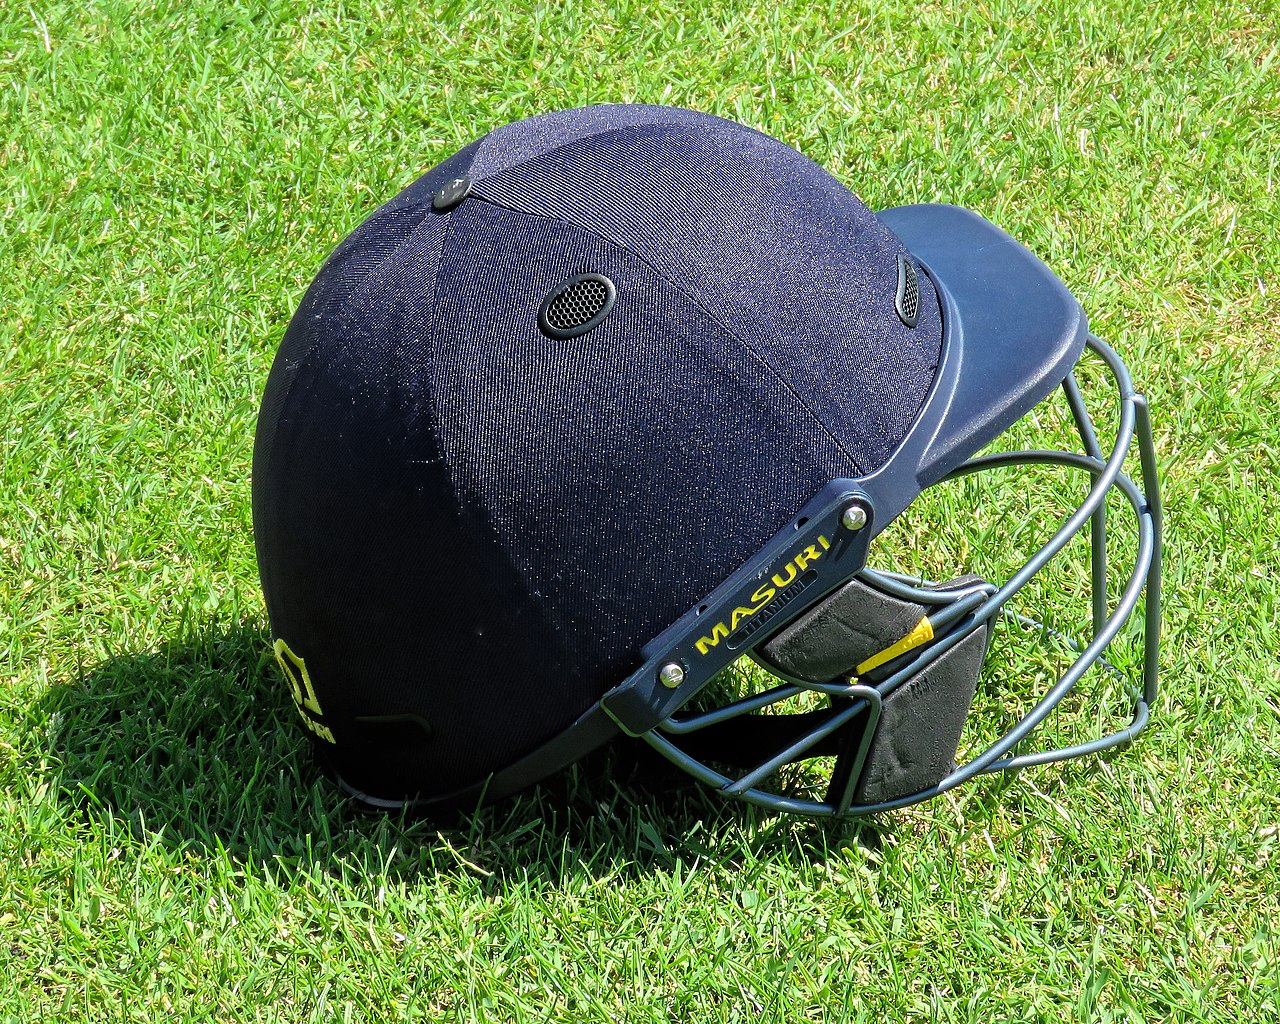 Cricket helmet at Fenner's Field ground, Cambridge University Cricket Club, England